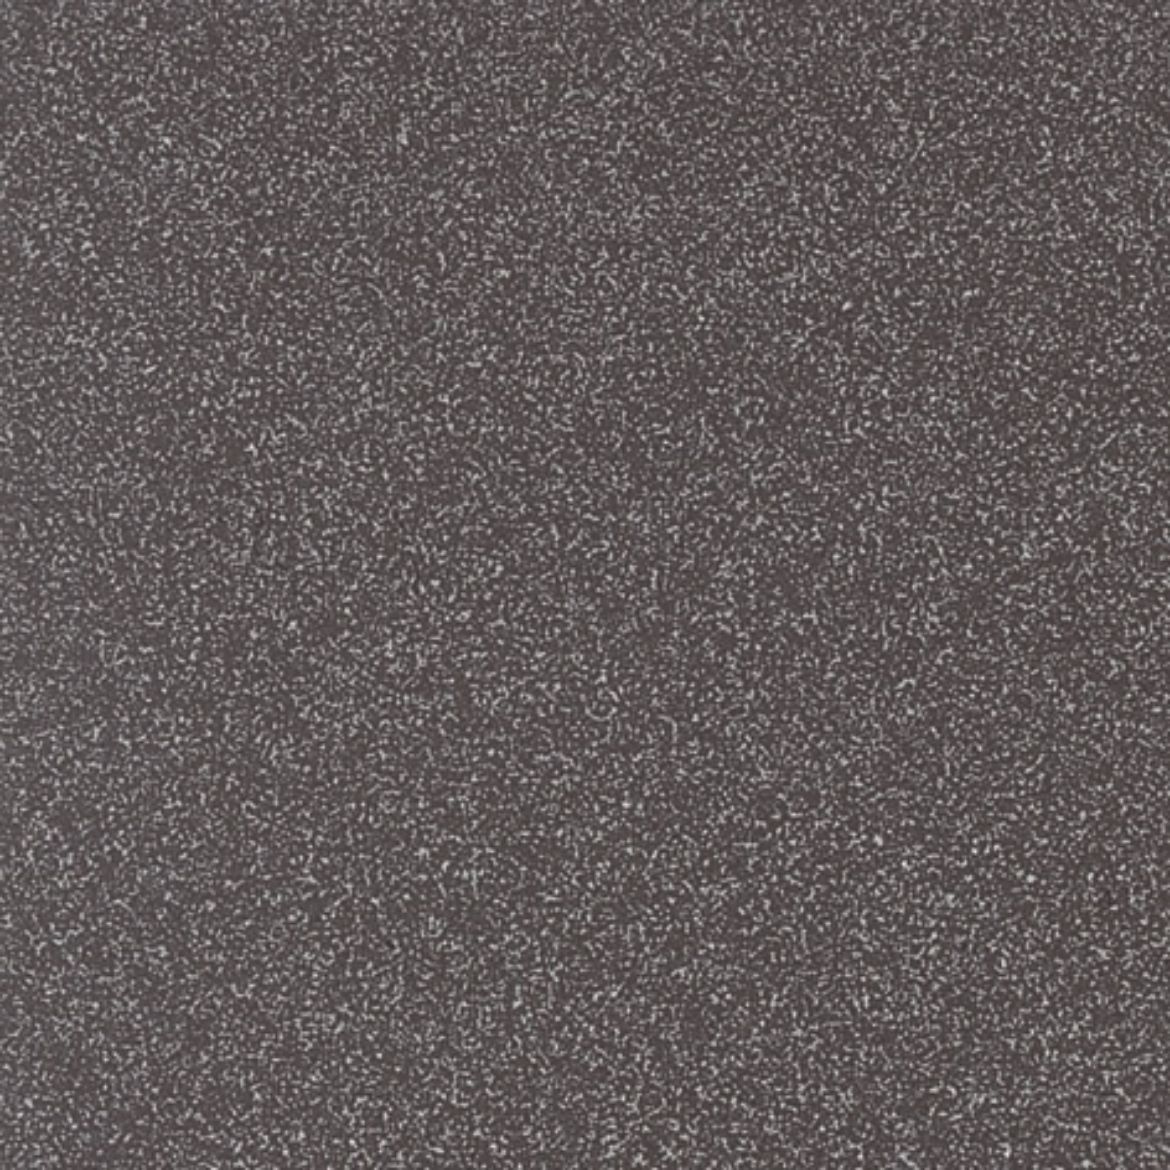 Billede af Taurus Granit Rio Negro 69 S 198x198 mm